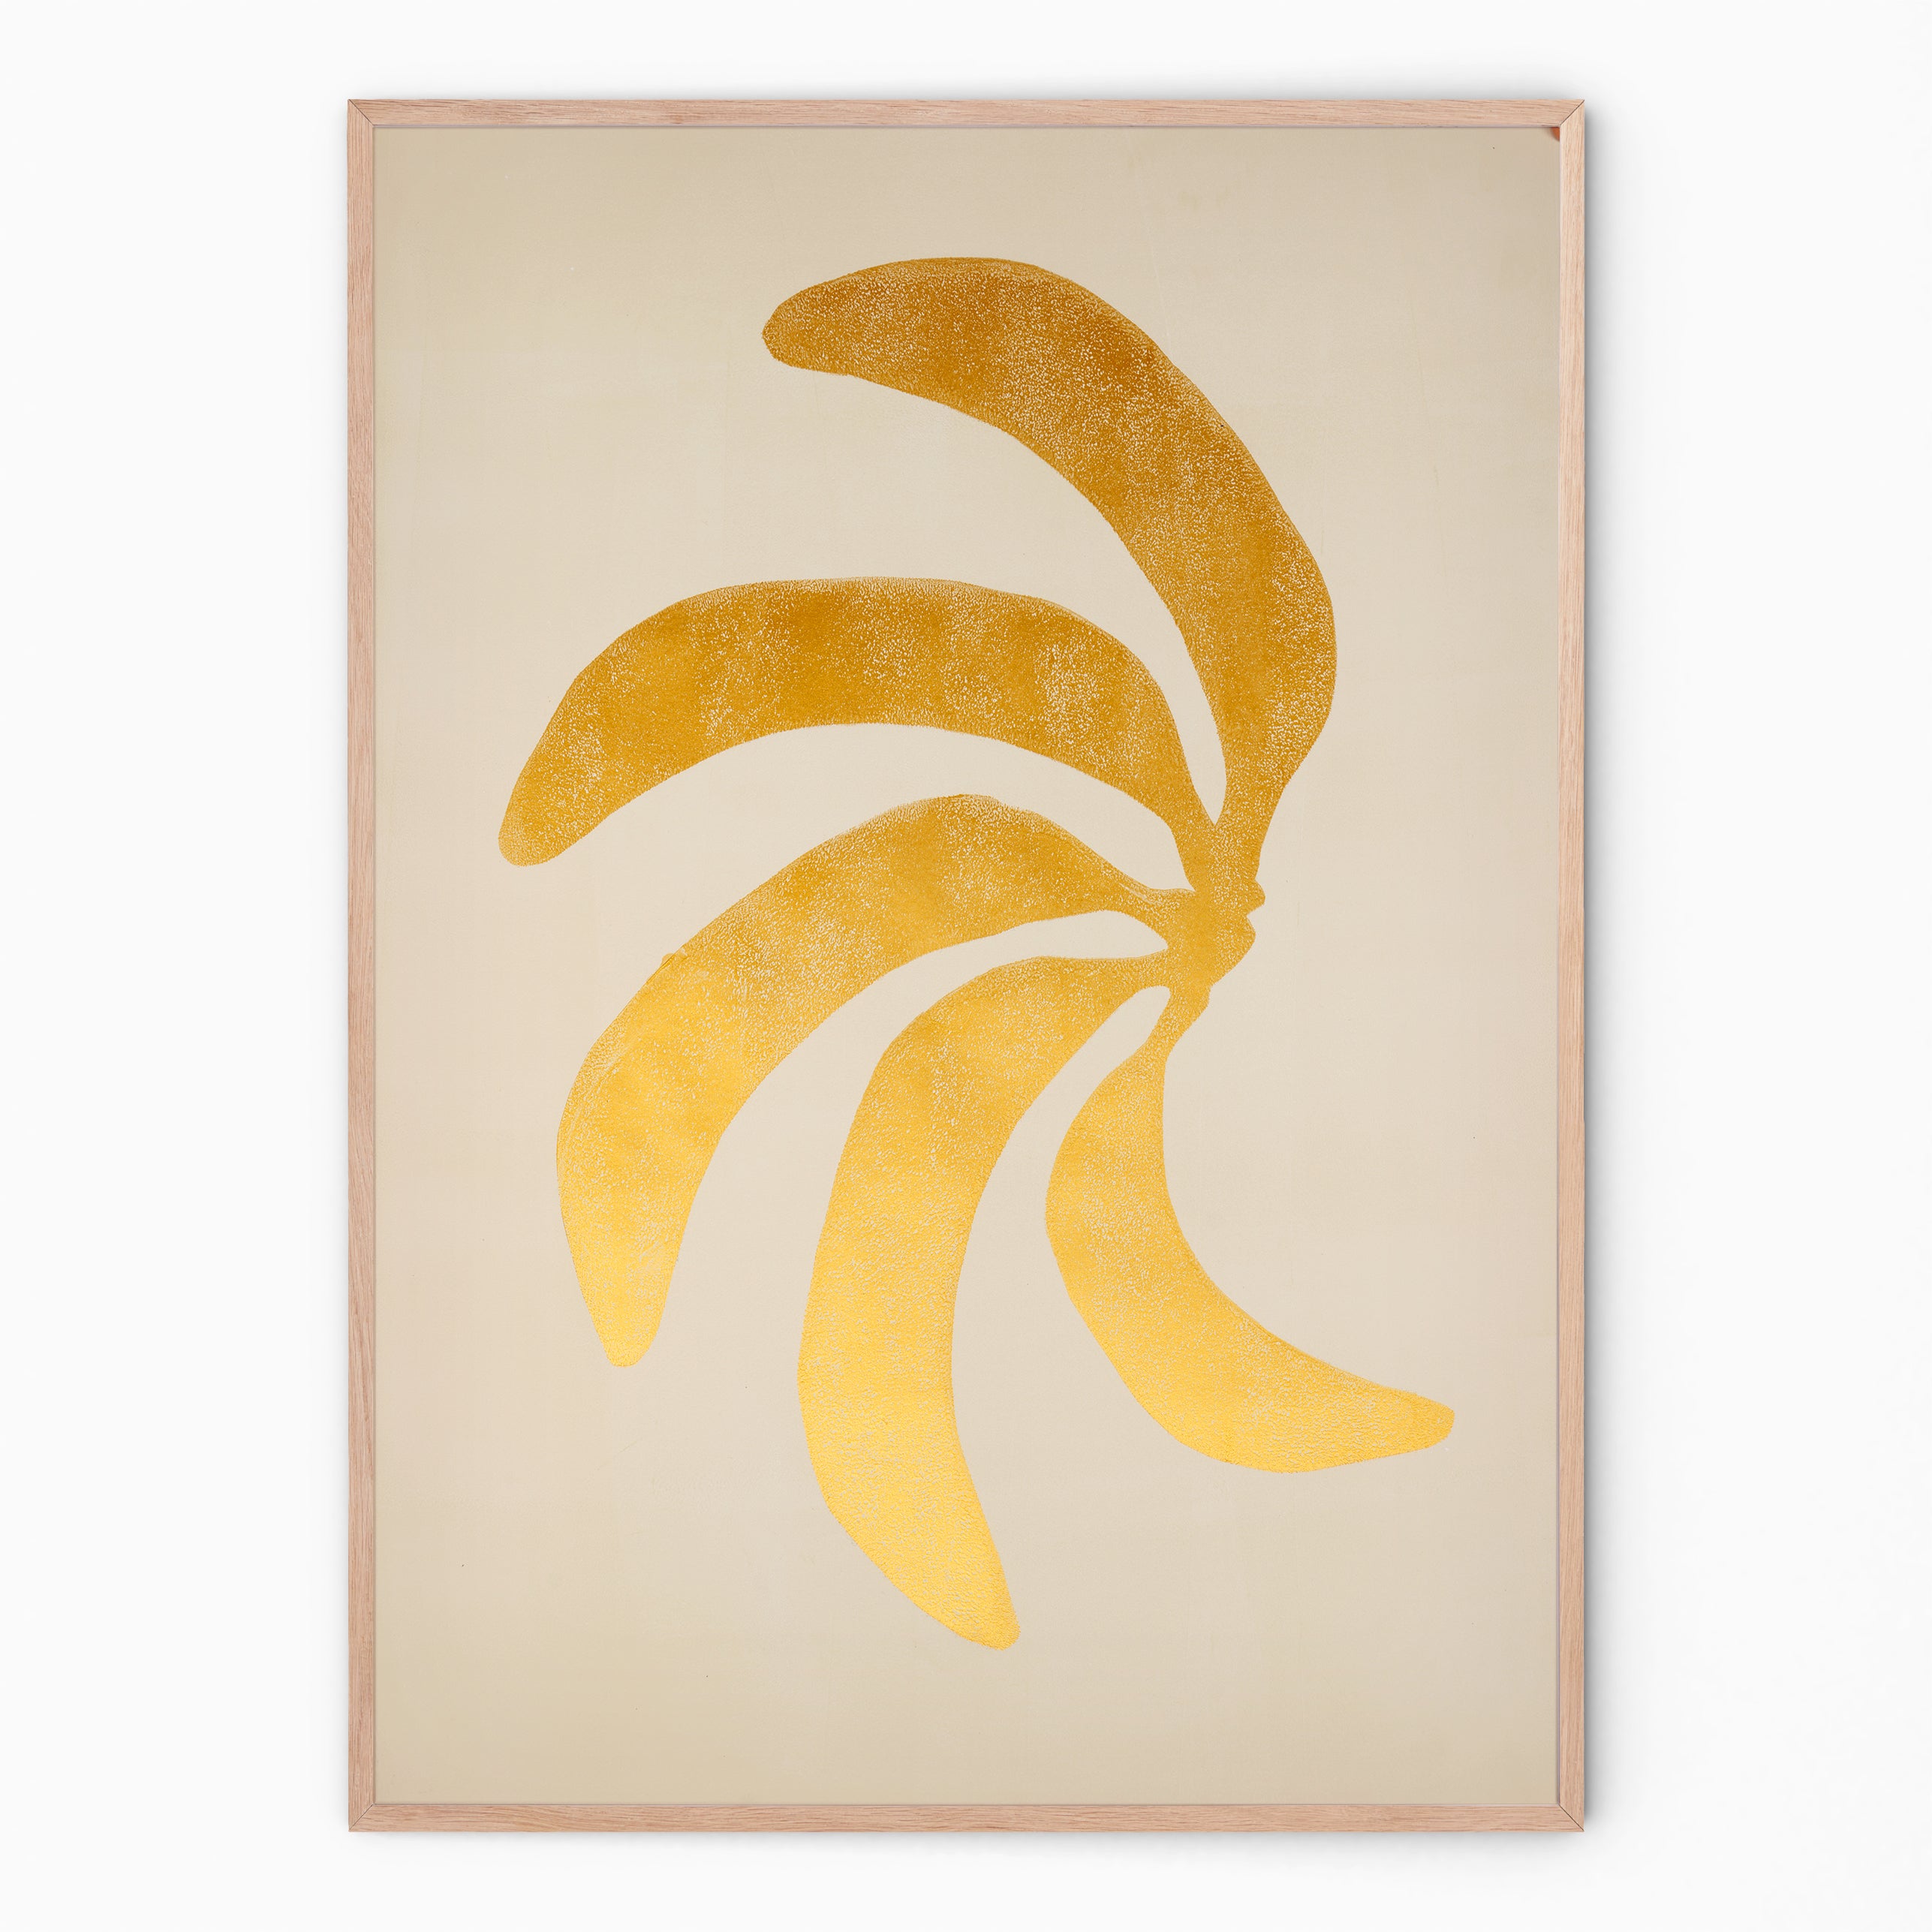 Gold & mushroom wall decor with bananas | monoprint | Enkel Art Studio